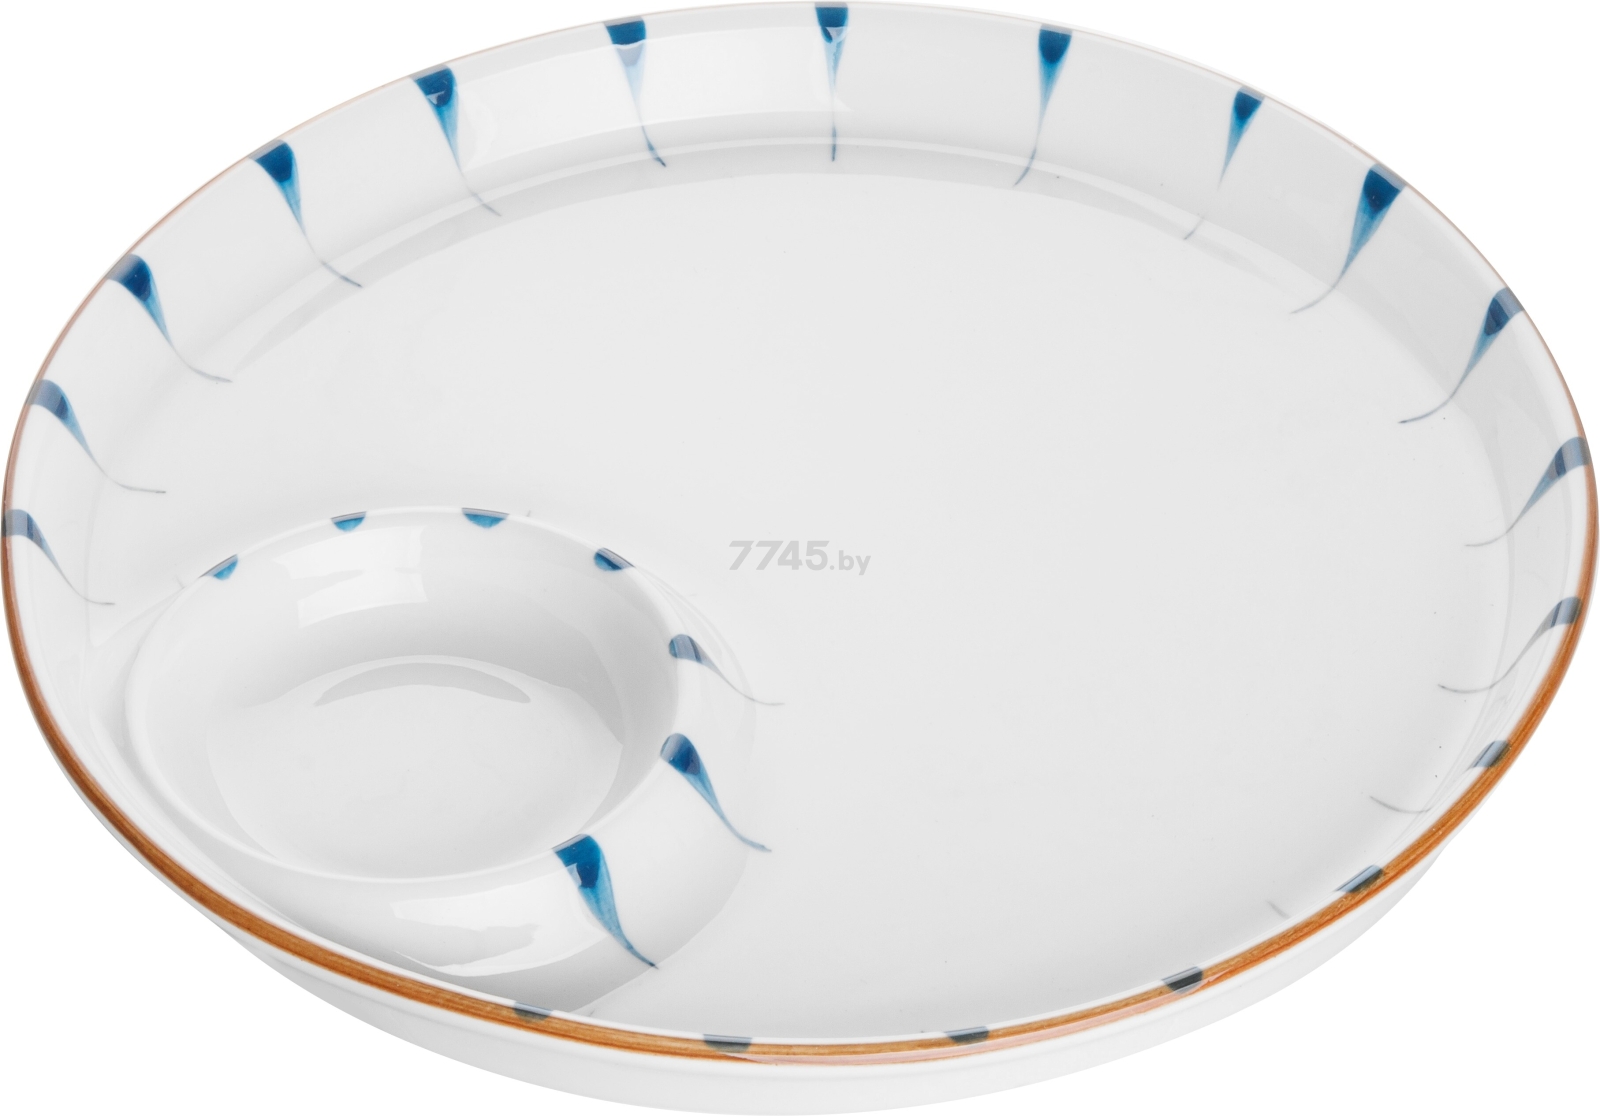 Блюдо керамическое круглое PERFECTO LINEA Marine 22,5х2,3 см (17-122250)